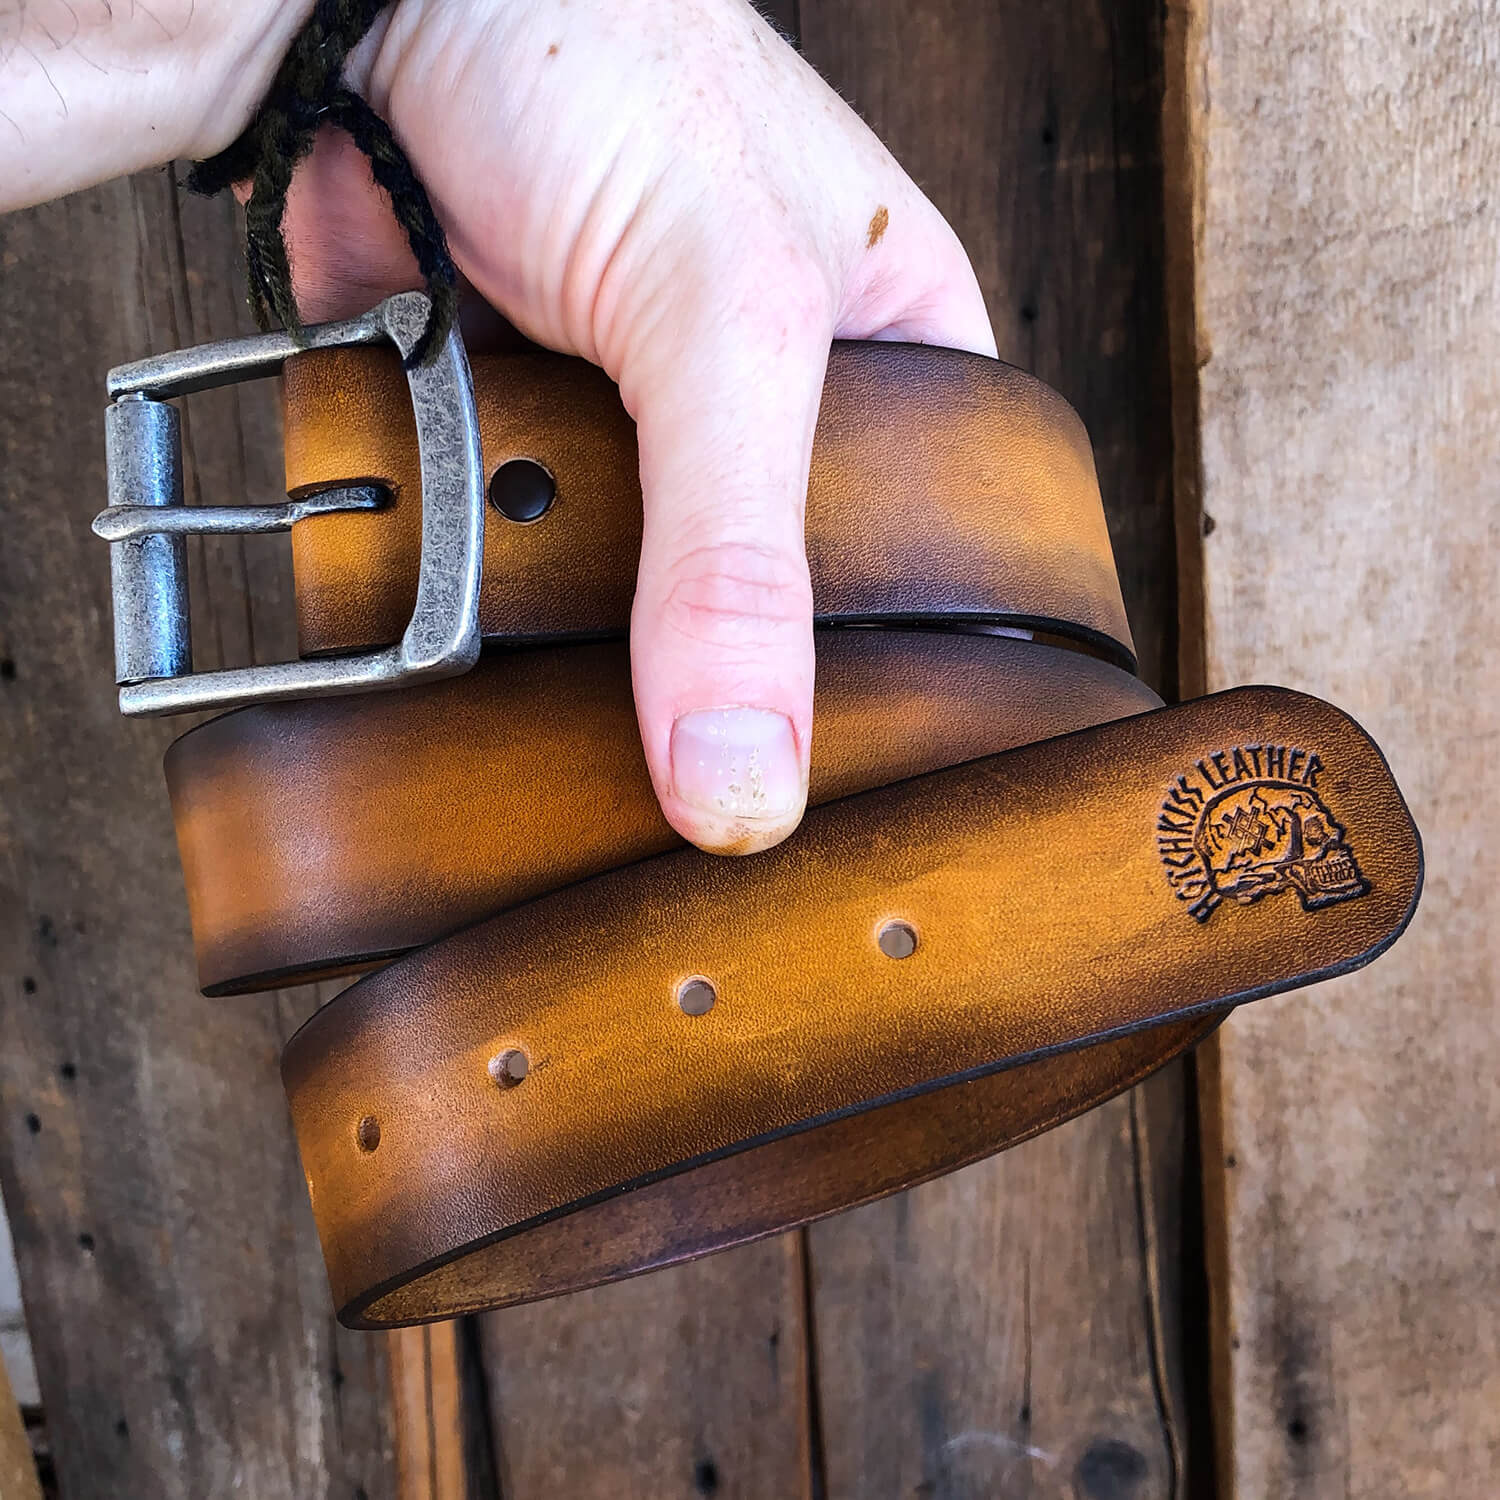 Custom Leather Belts, Handmade Leather Goods